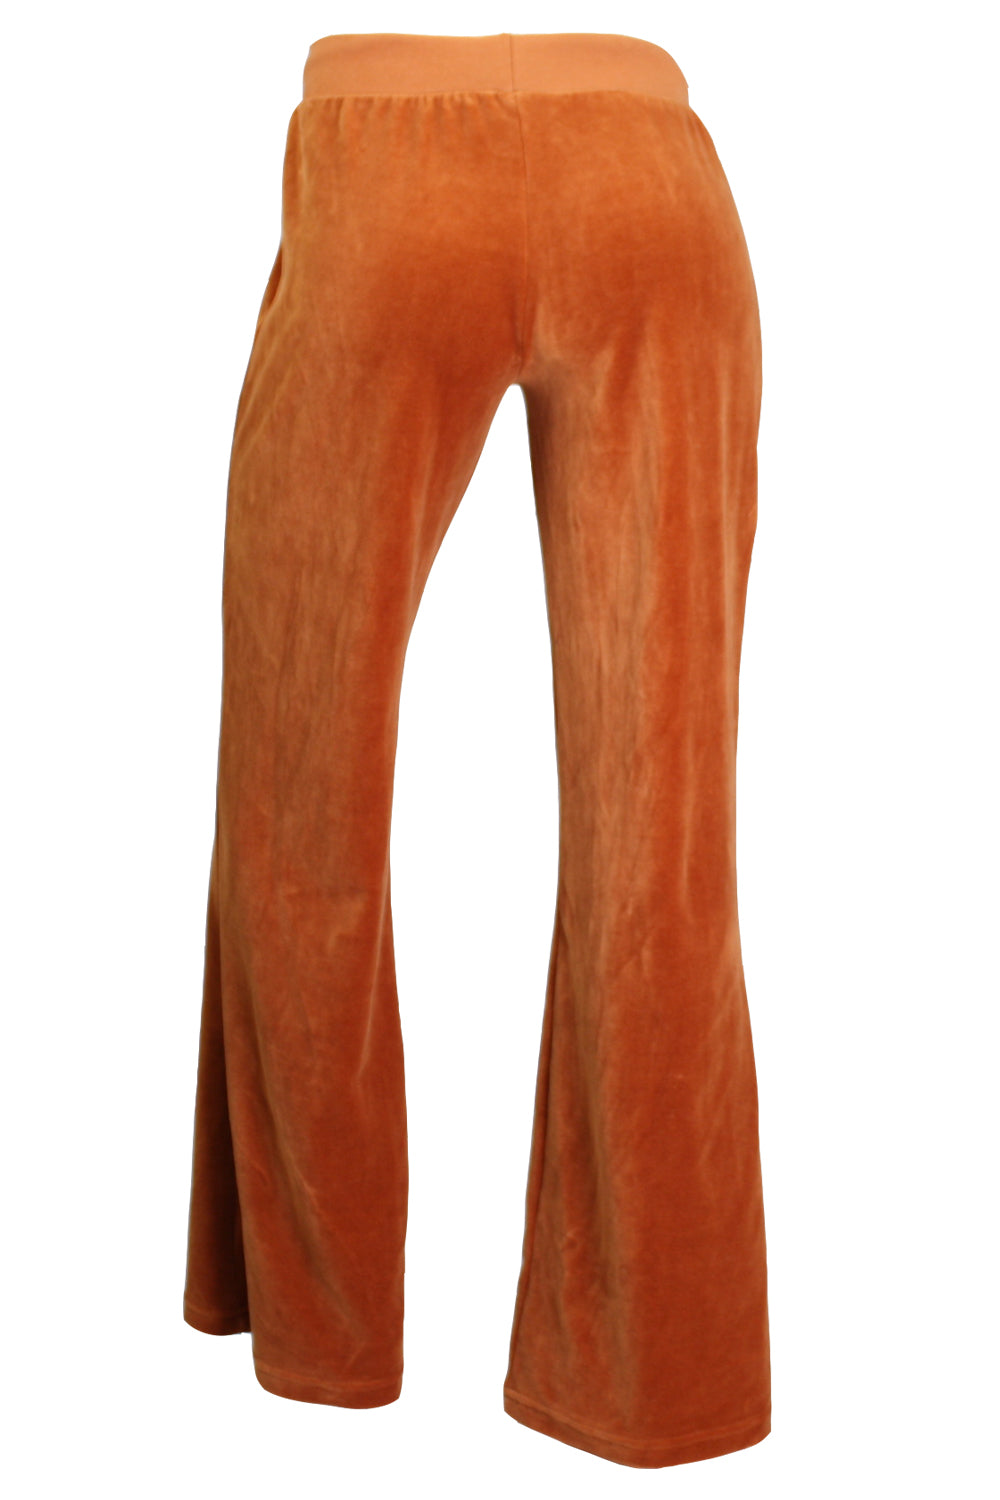 Womens Burnt Orange Velour Pants, Sweatpants